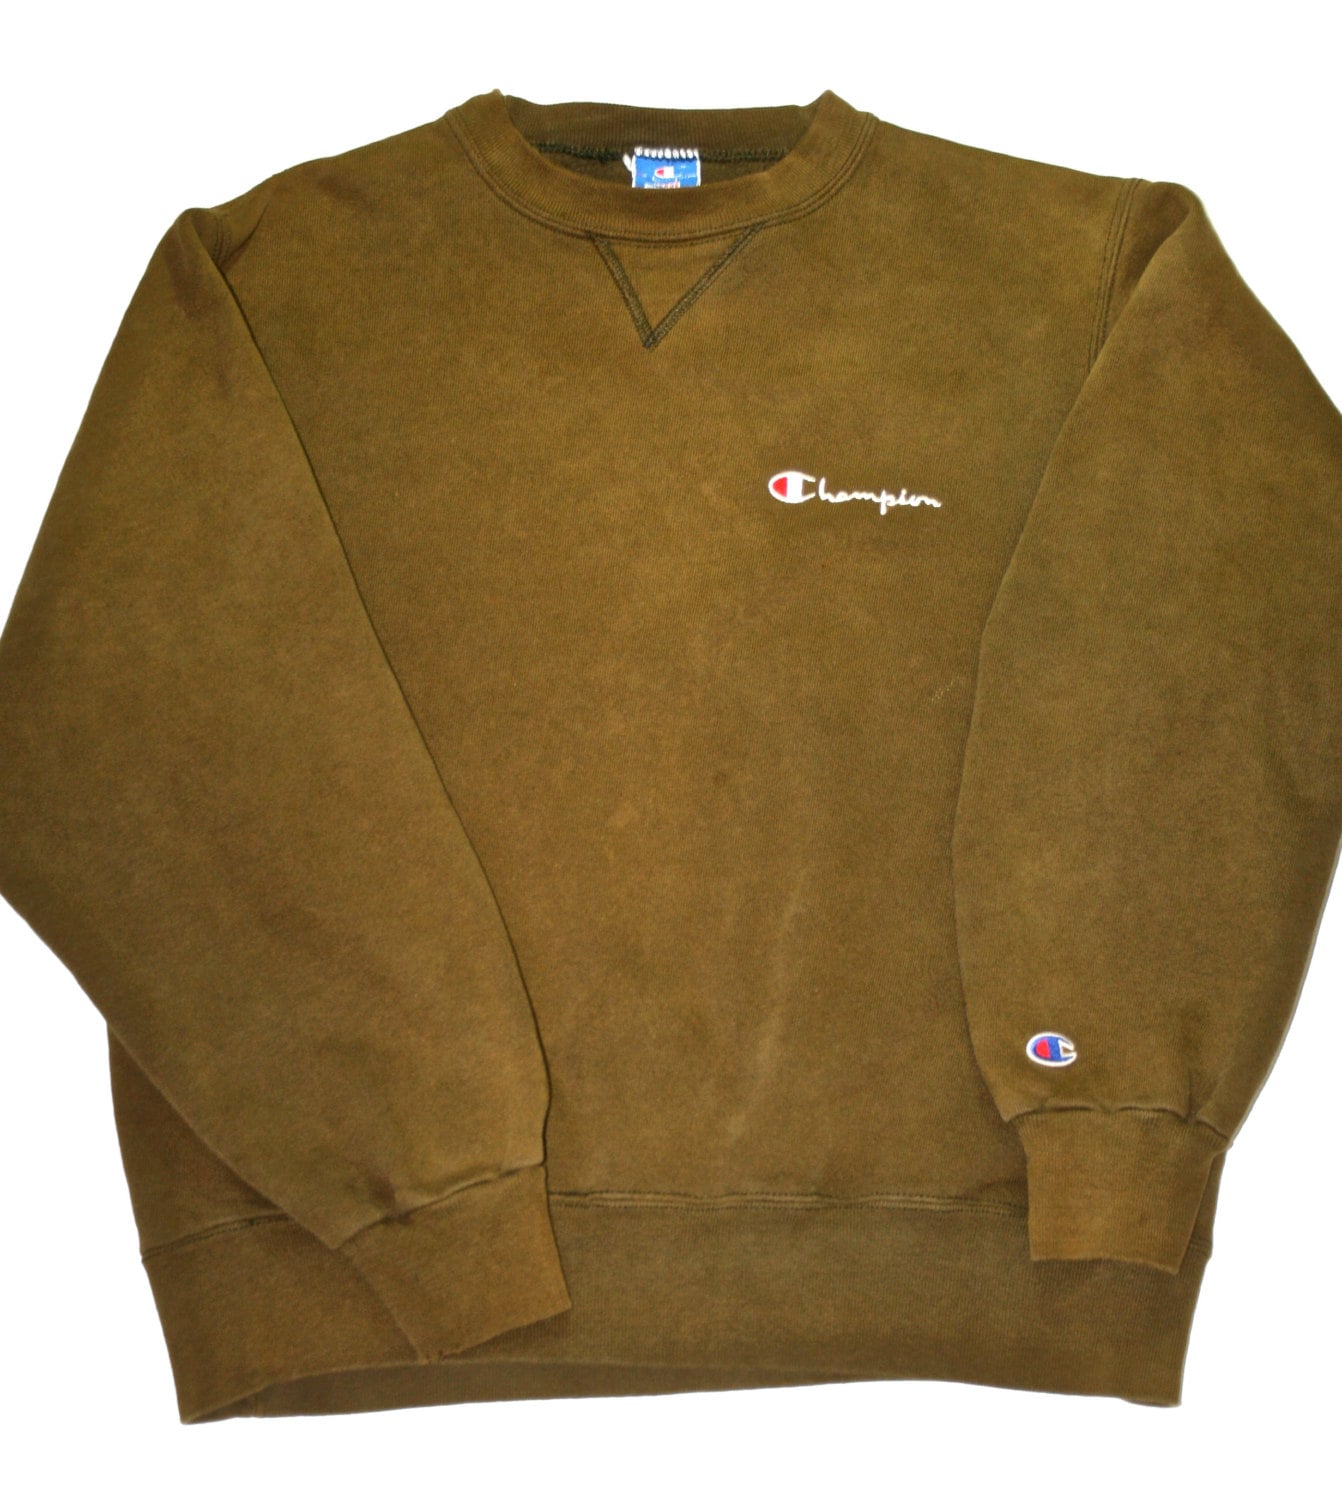 Vintage 90s Champion Sweatshirt Mens Size by VintageMensGoods